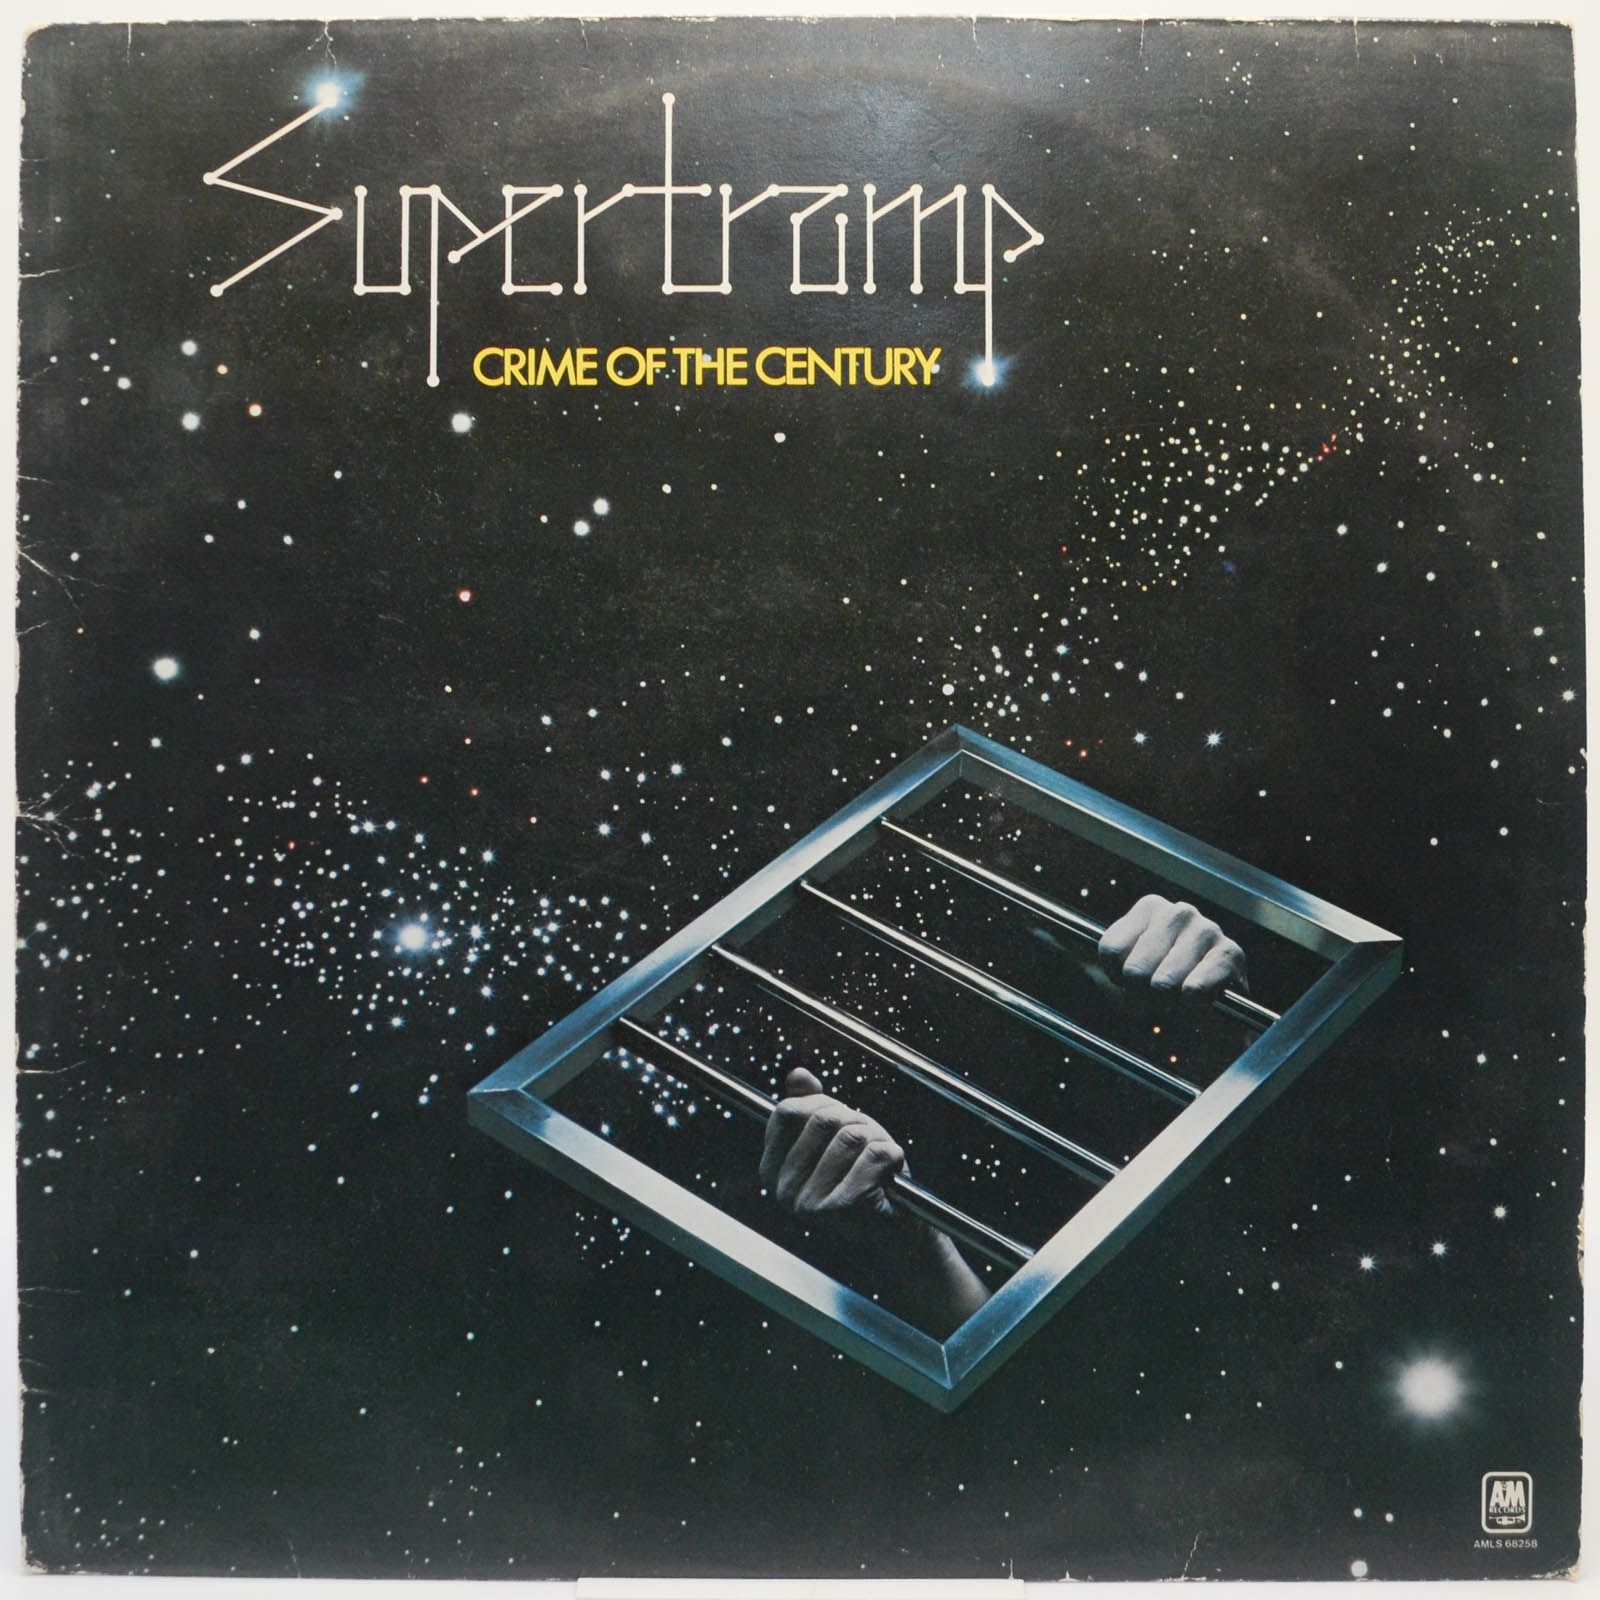 Supertramp — Crime Of The Century, 1974